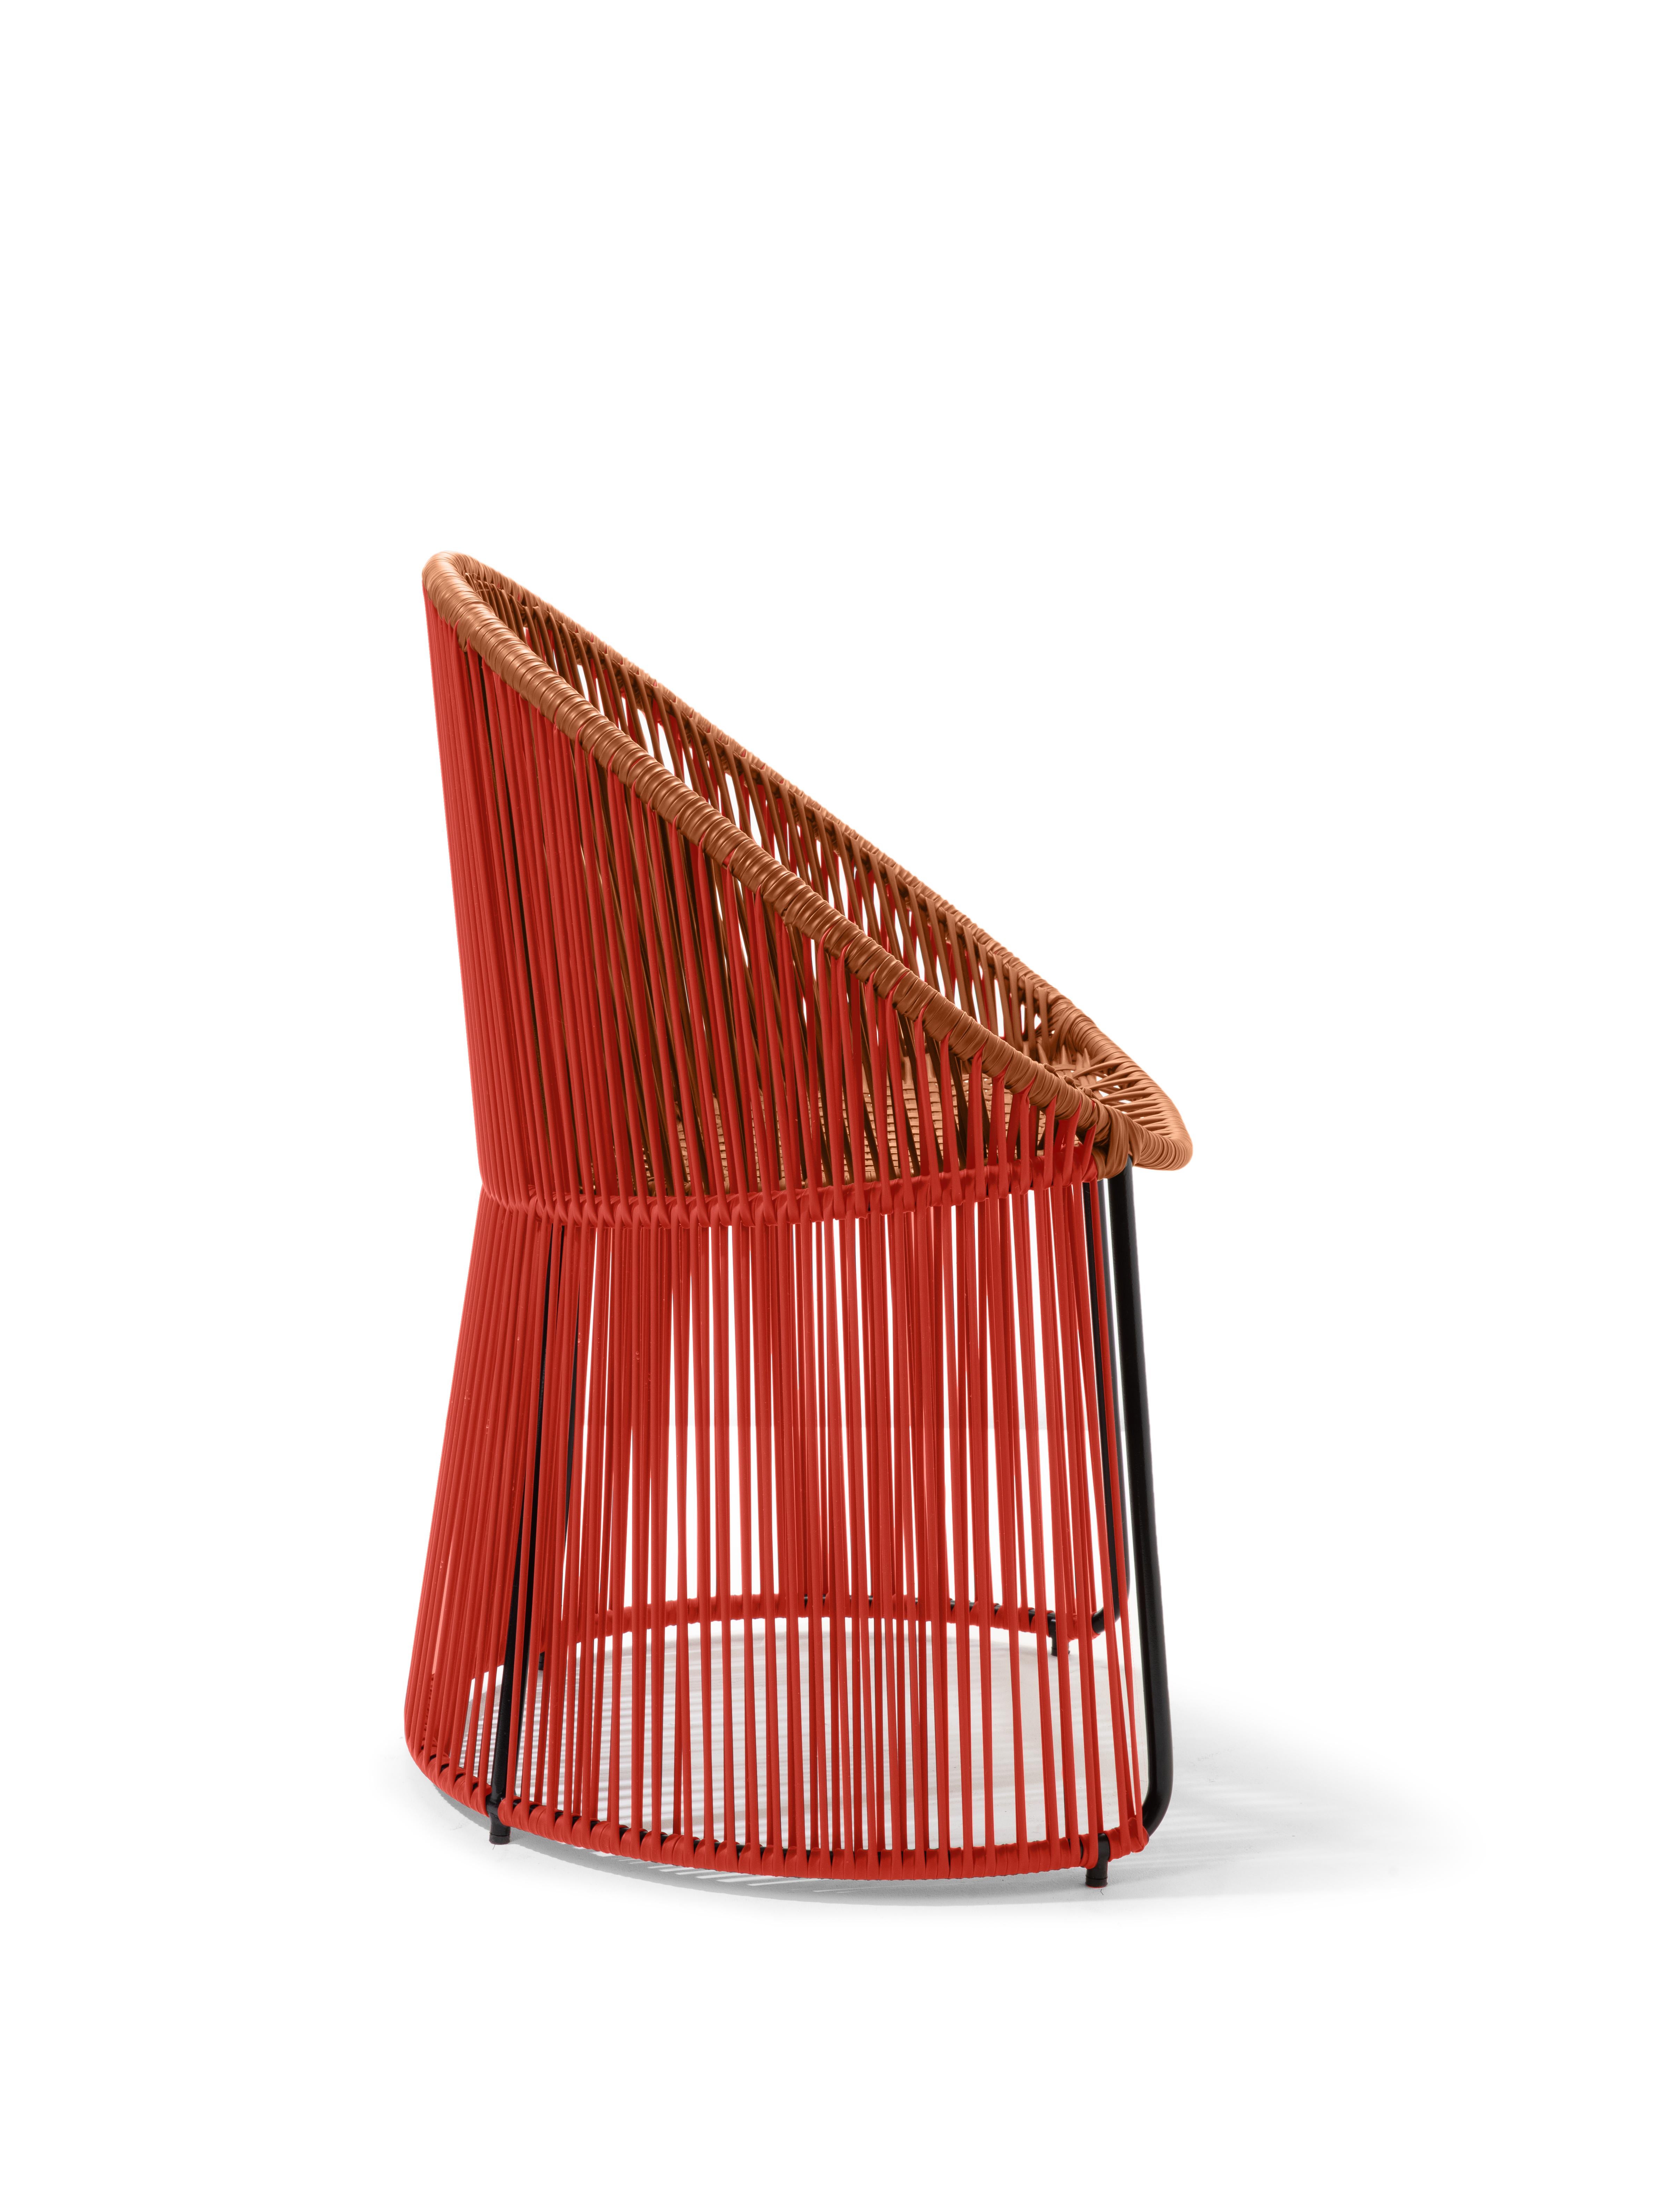 German Set of 4 Coral Cartagenas Dining Chair by Sebastian Herkner For Sale